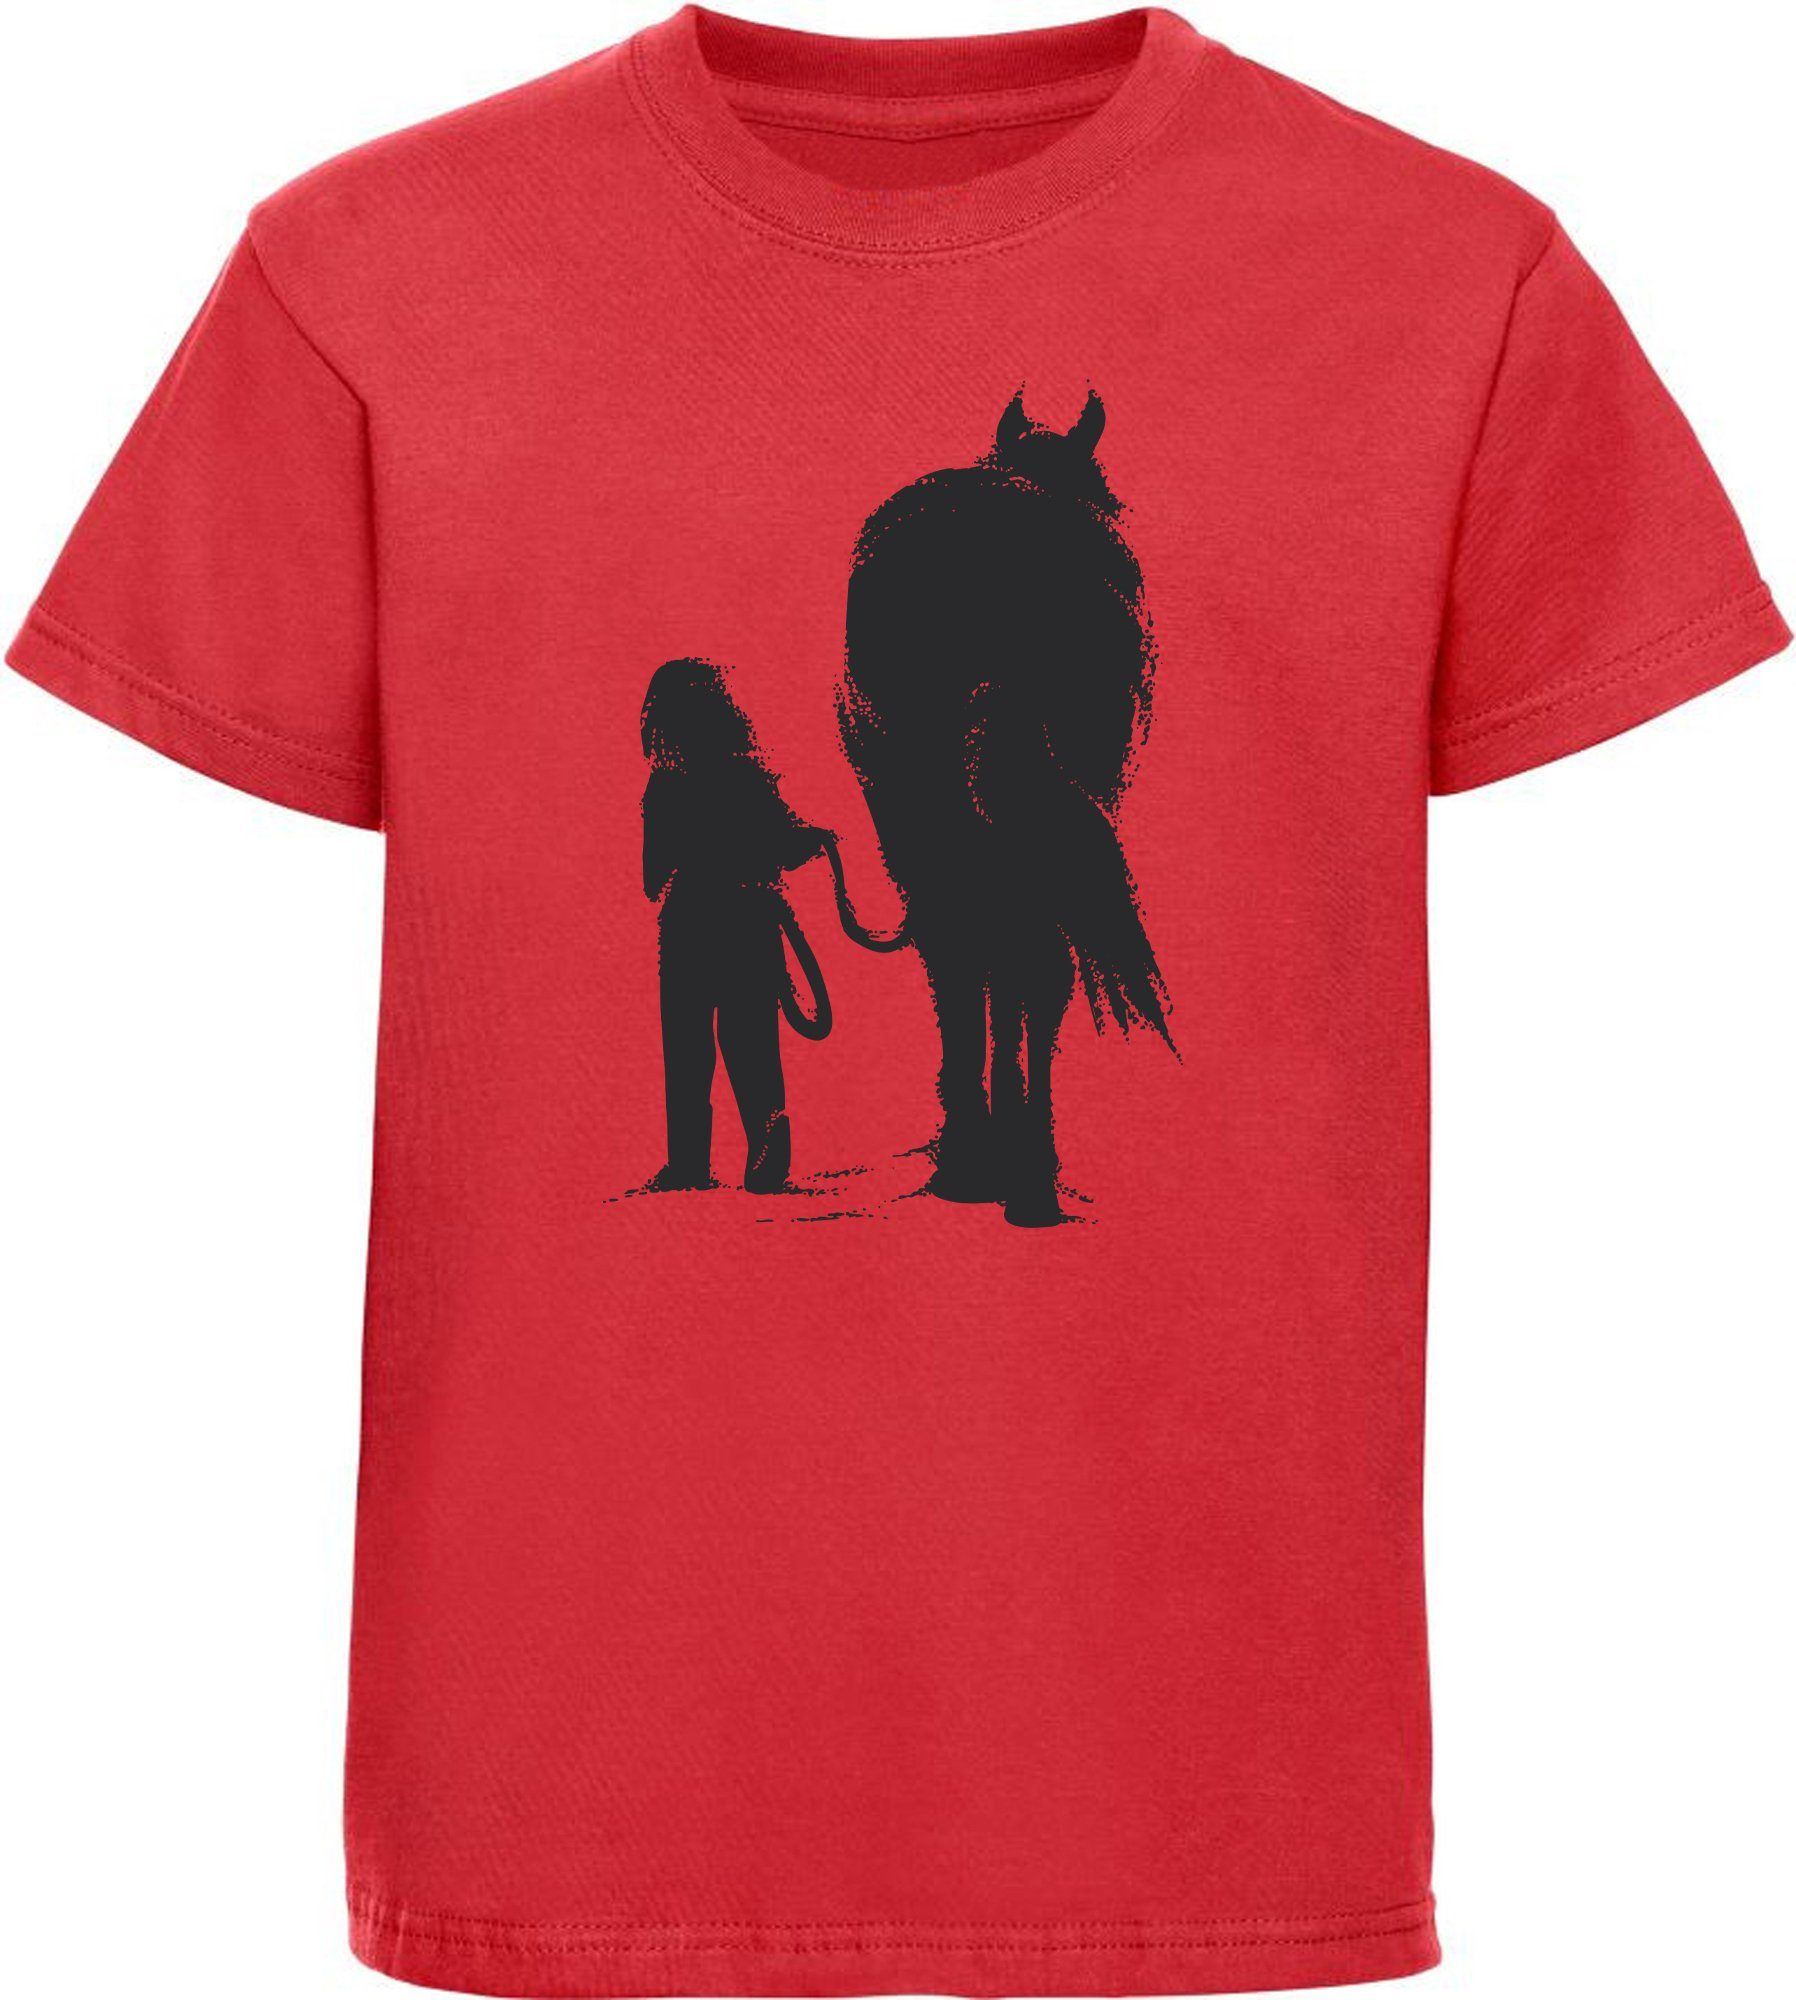 & mit Spaziergang Shirt Kinder MyDesign24 beim Pferd Print Baumwollshirt i250 rot T-Shirt bedruckt - Mädchen Aufdruck,